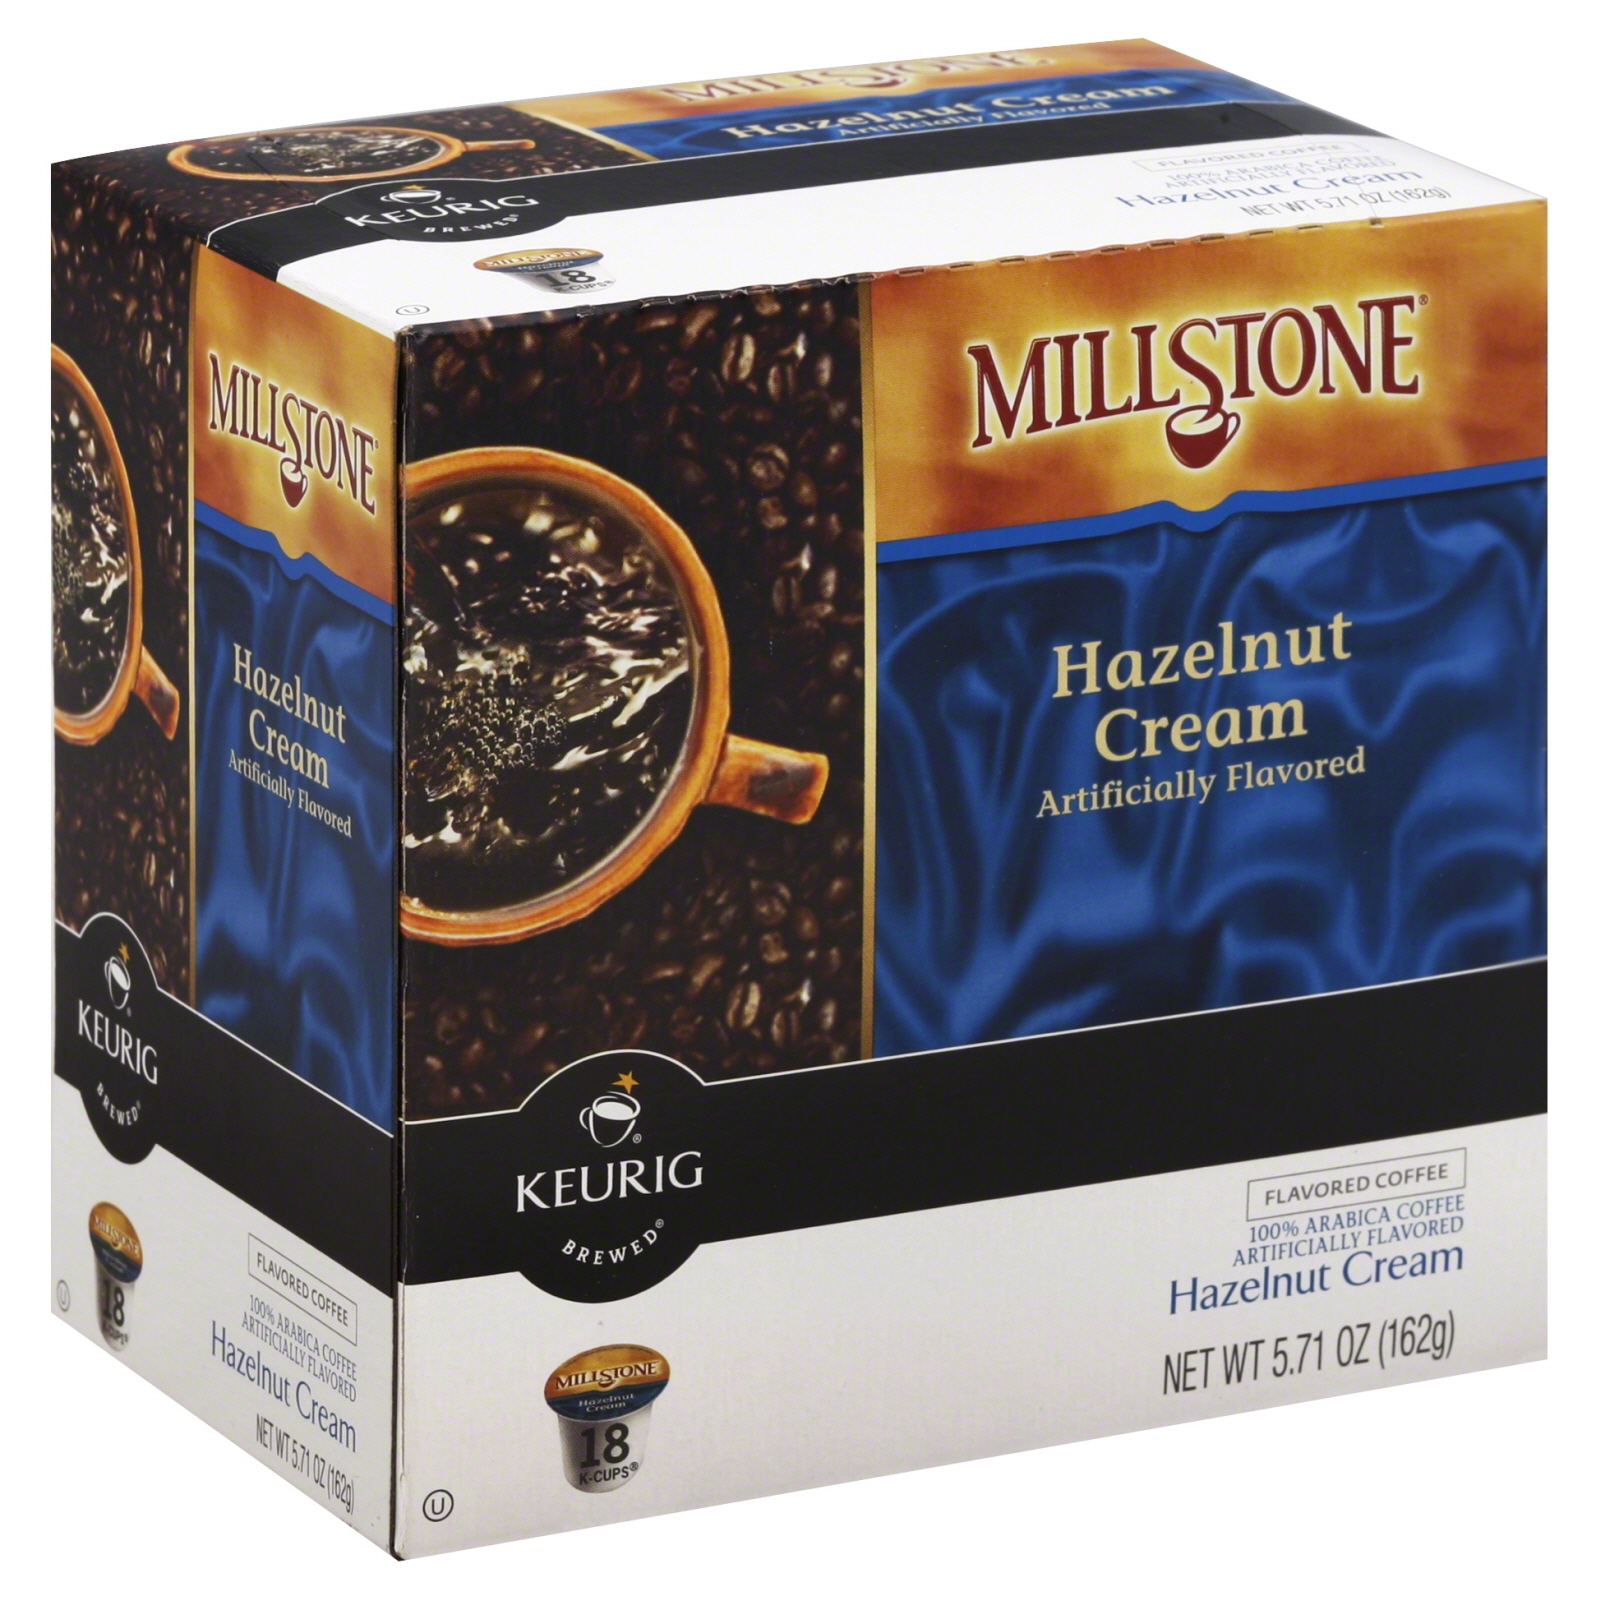 Millstone K-Cup Hazelnut Cream Coffee, 18 ct